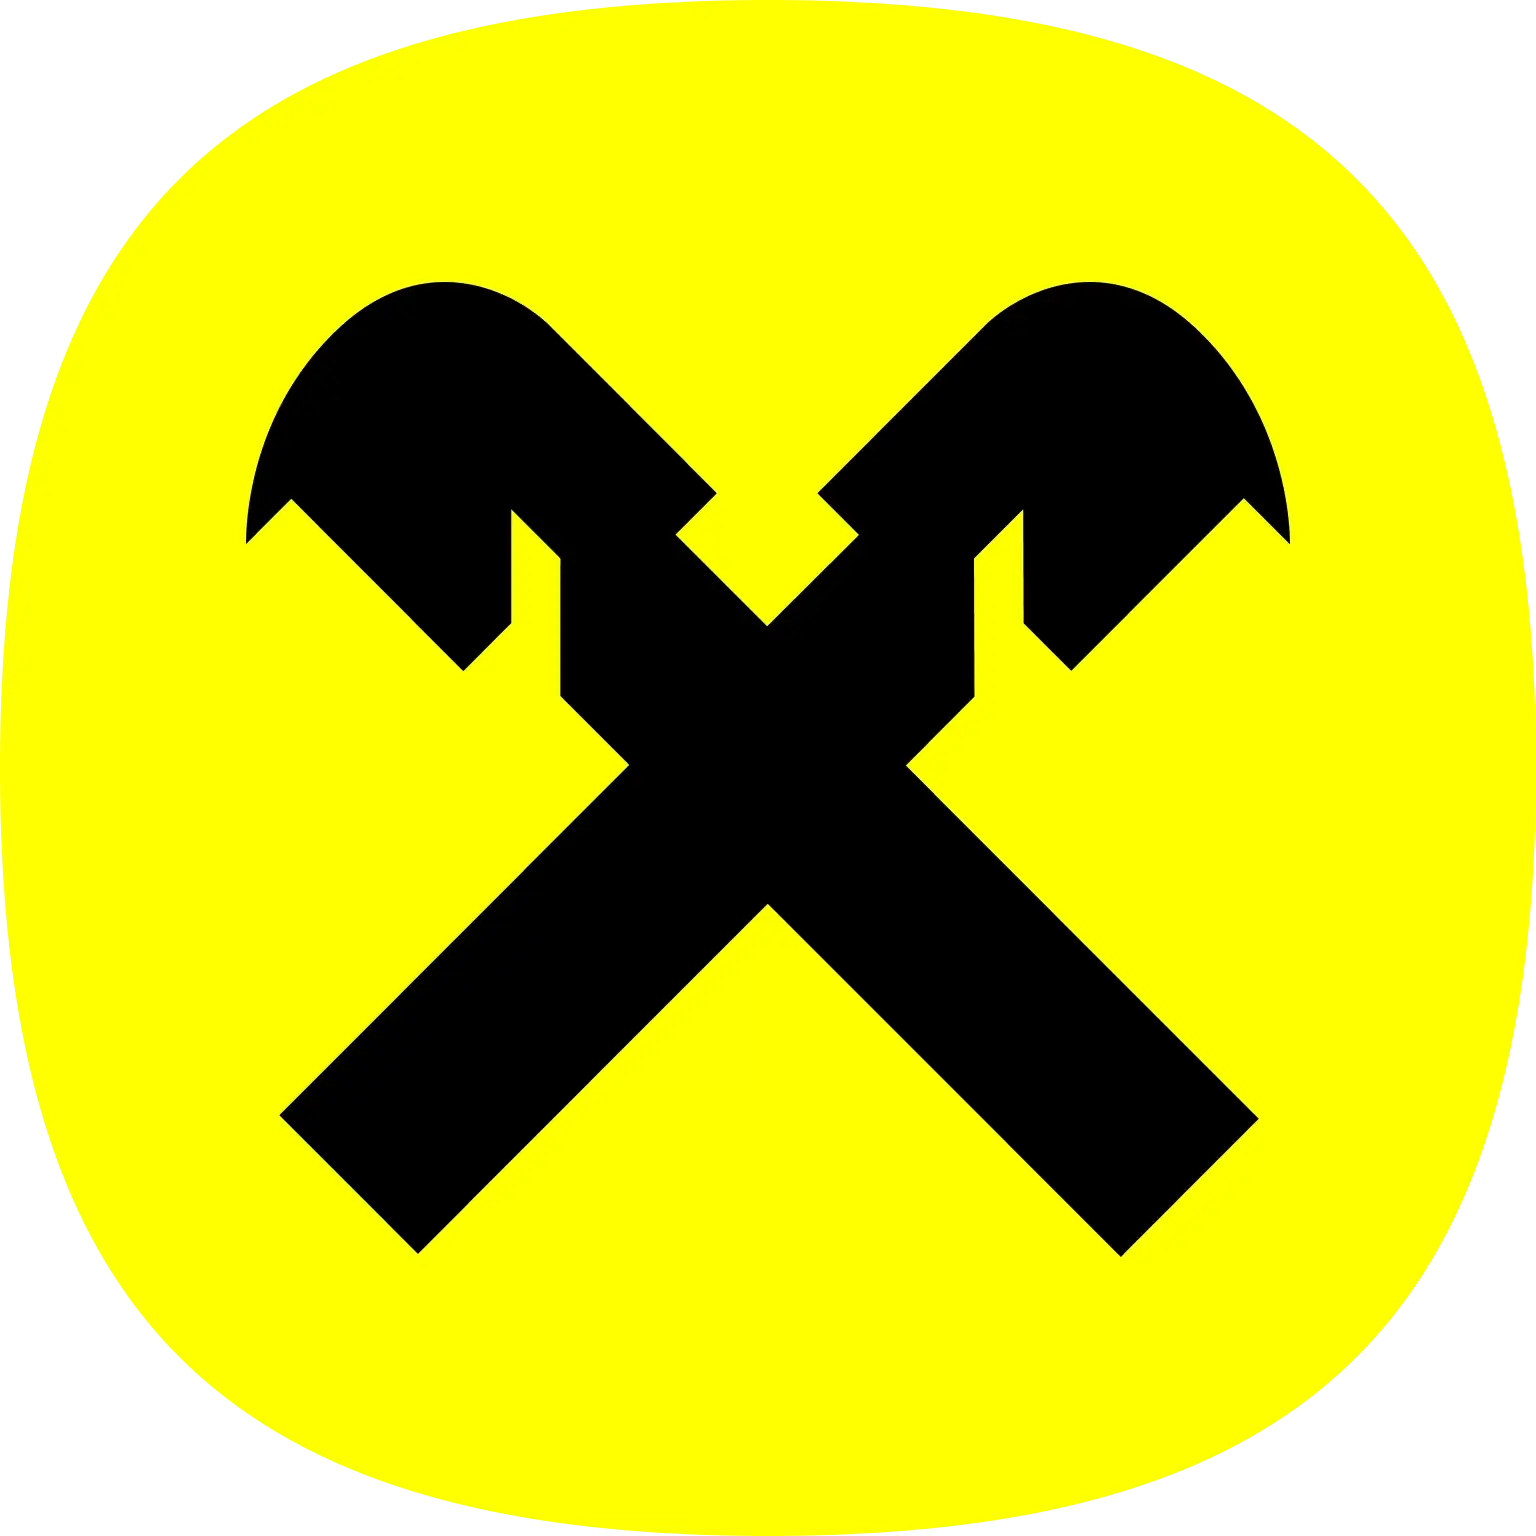 логотип Райффайзен банк